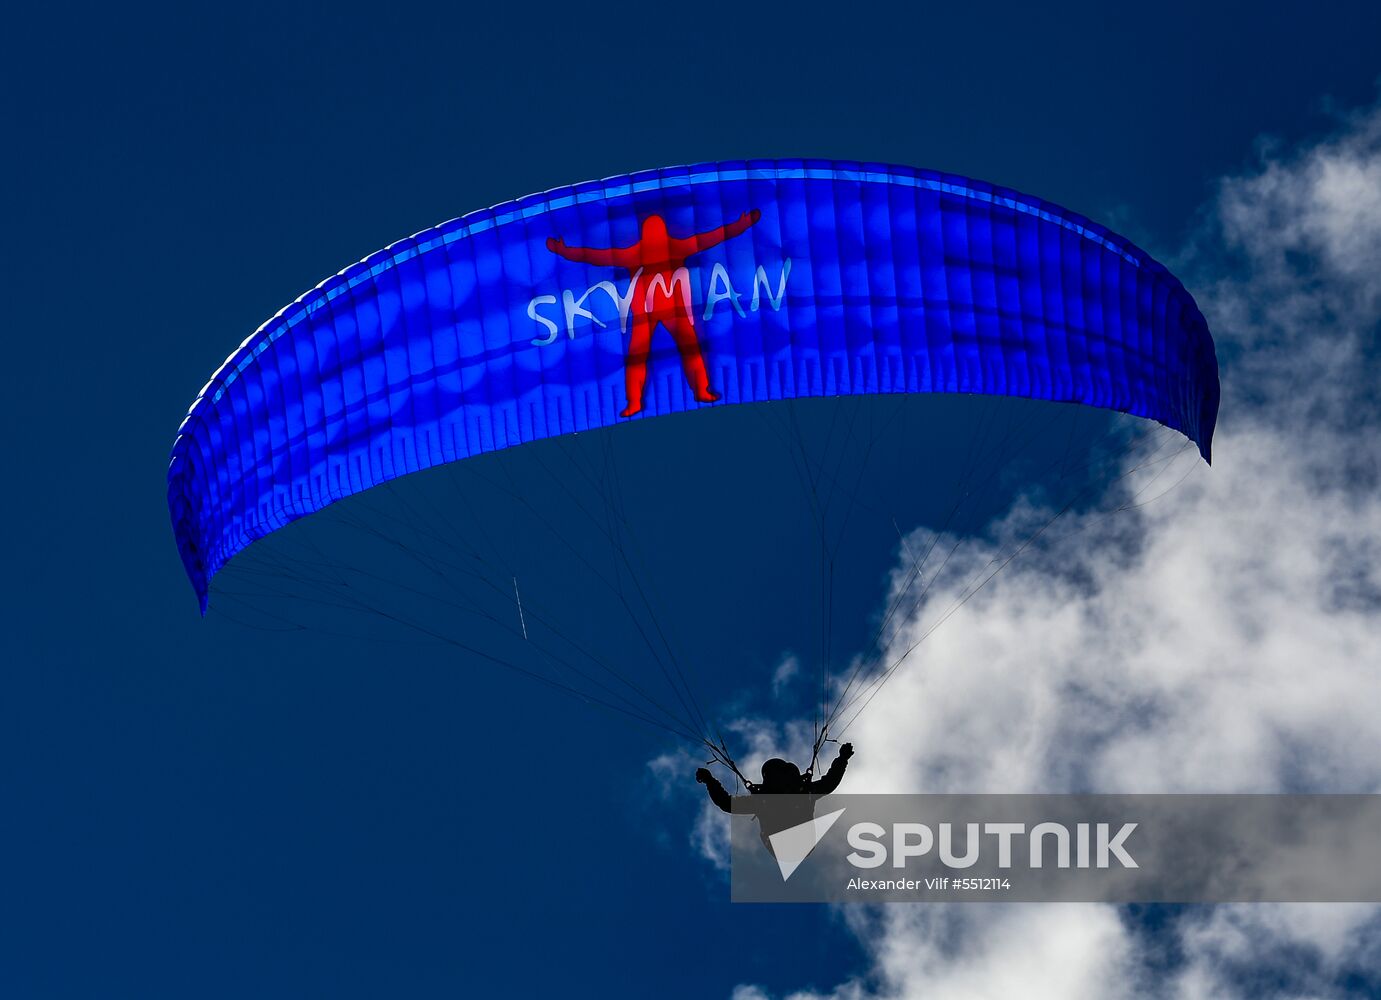 Paragliding in Neustift im Stubaital